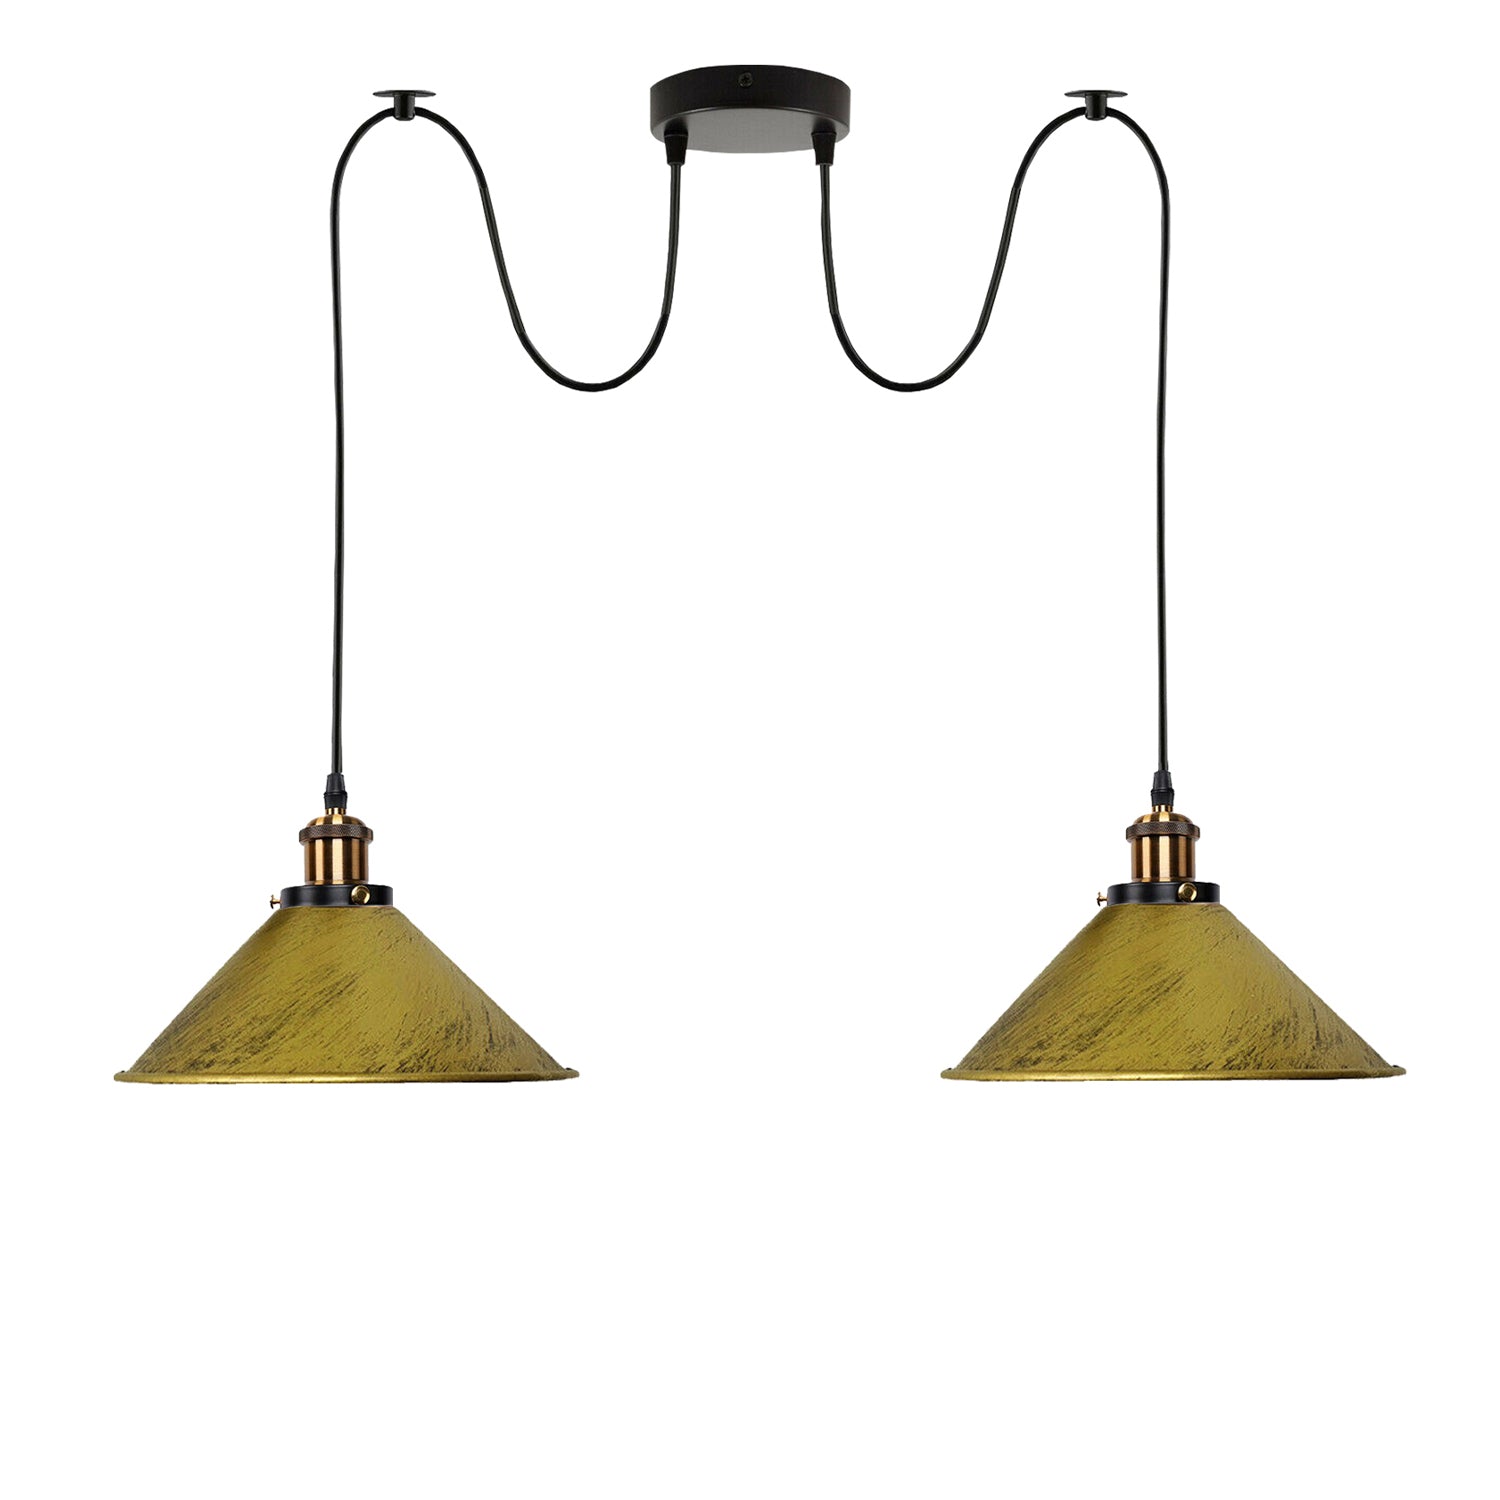 Spider Lamp Shades UK - Retro Brushed Brass Industrial Pendant Light